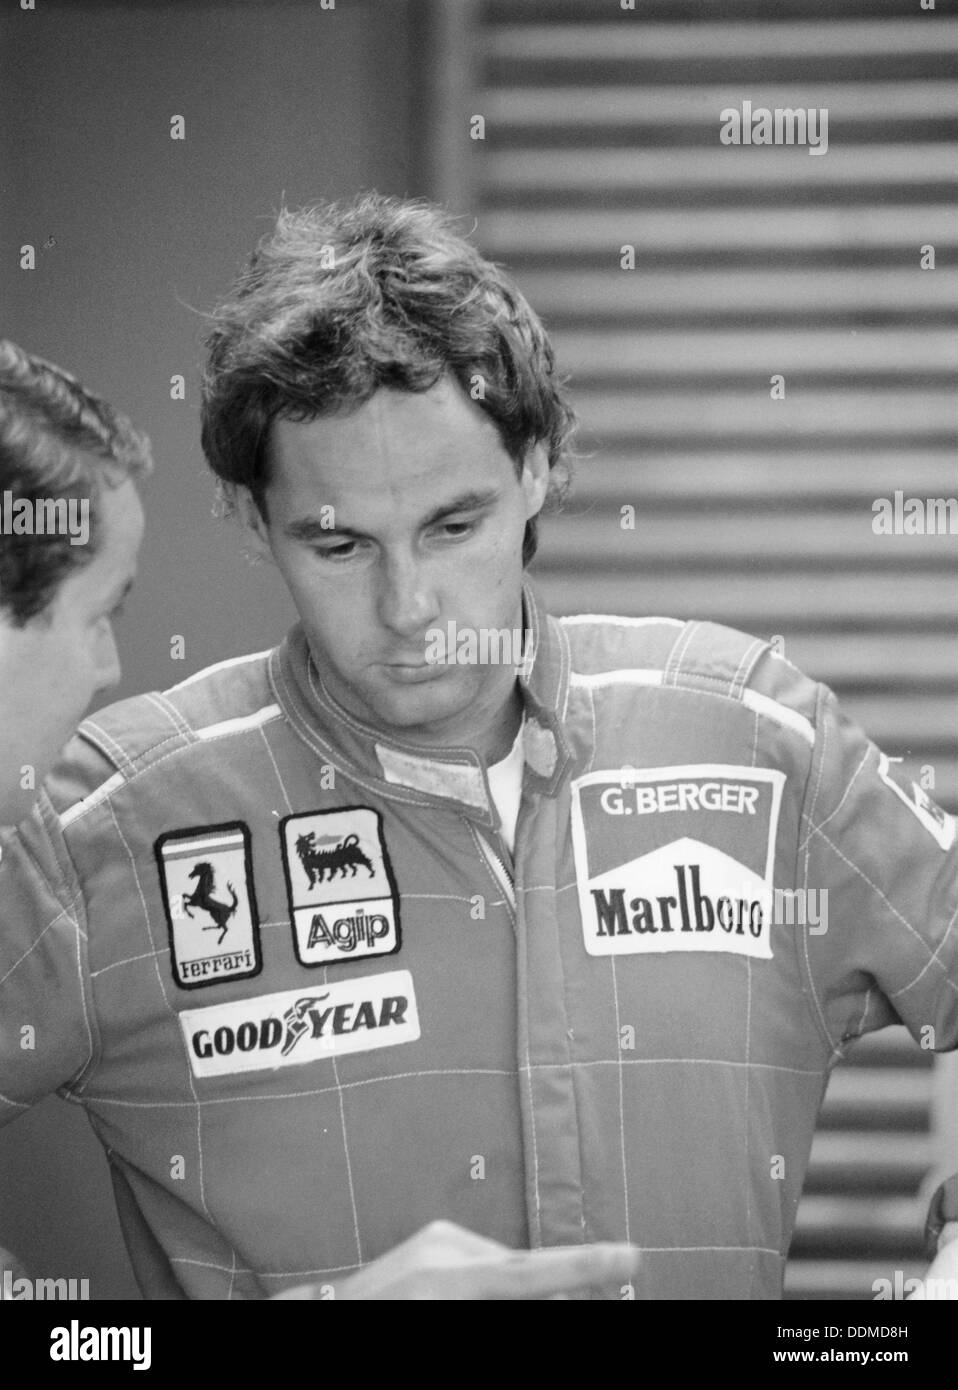 Gehard Berger listening to a member of the Ferrari team, 1988. Artist: Unknown Stock Photo